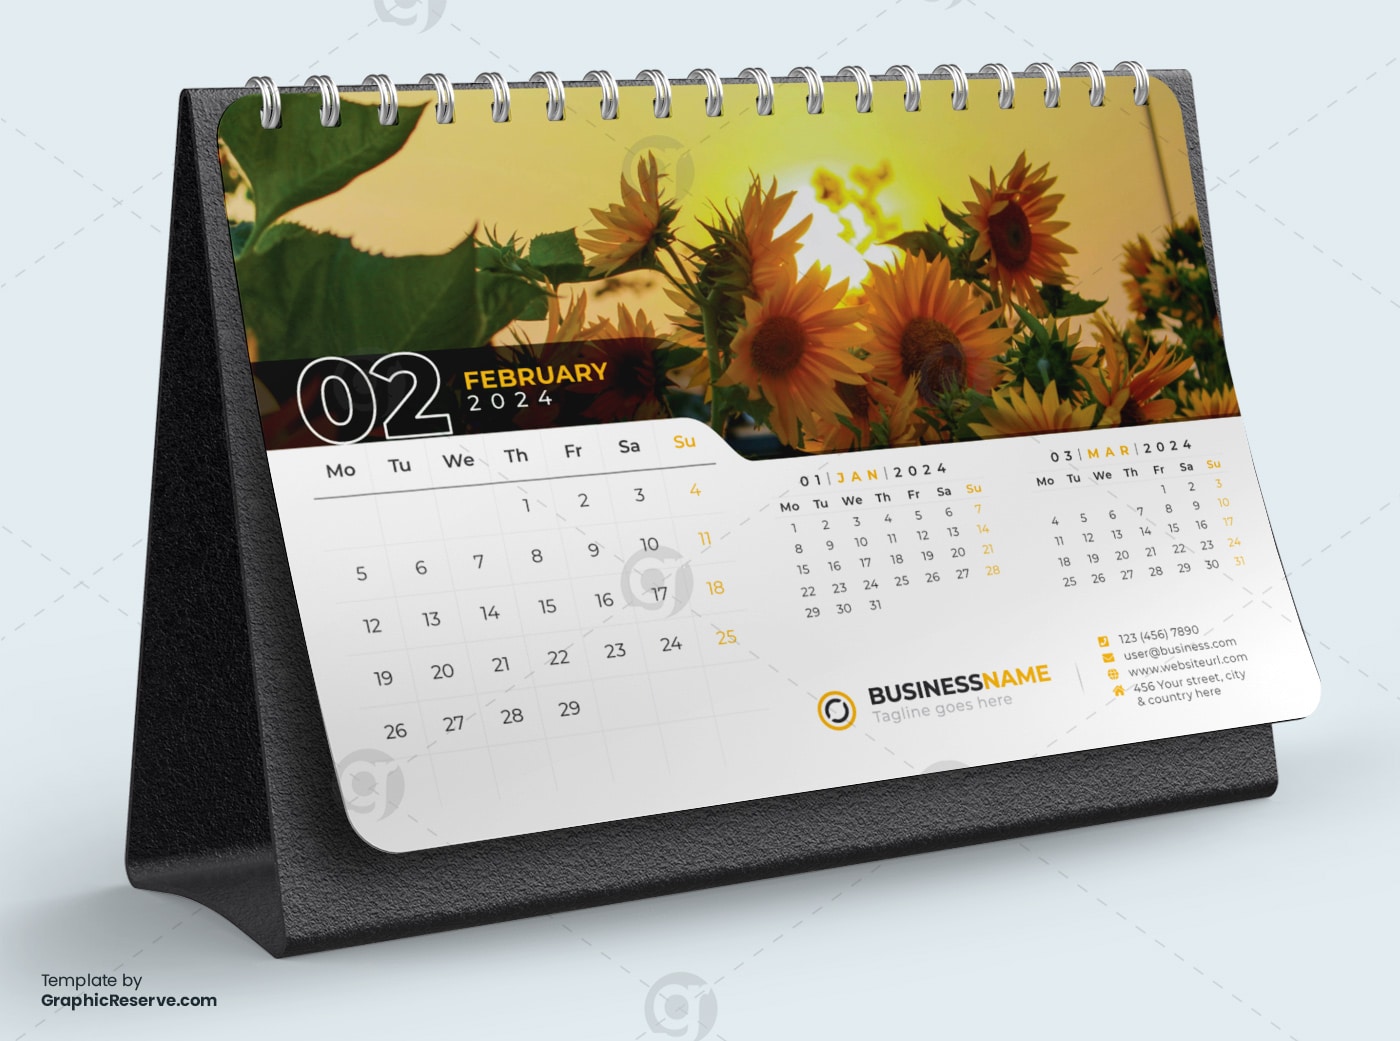 https://cdn.graphicreserve.com/wp-content/uploads/2023/11/Desk-Calendar-2024-Template-by-VisualGraphics-on-Graphic-Reserve.2v-5.jpg